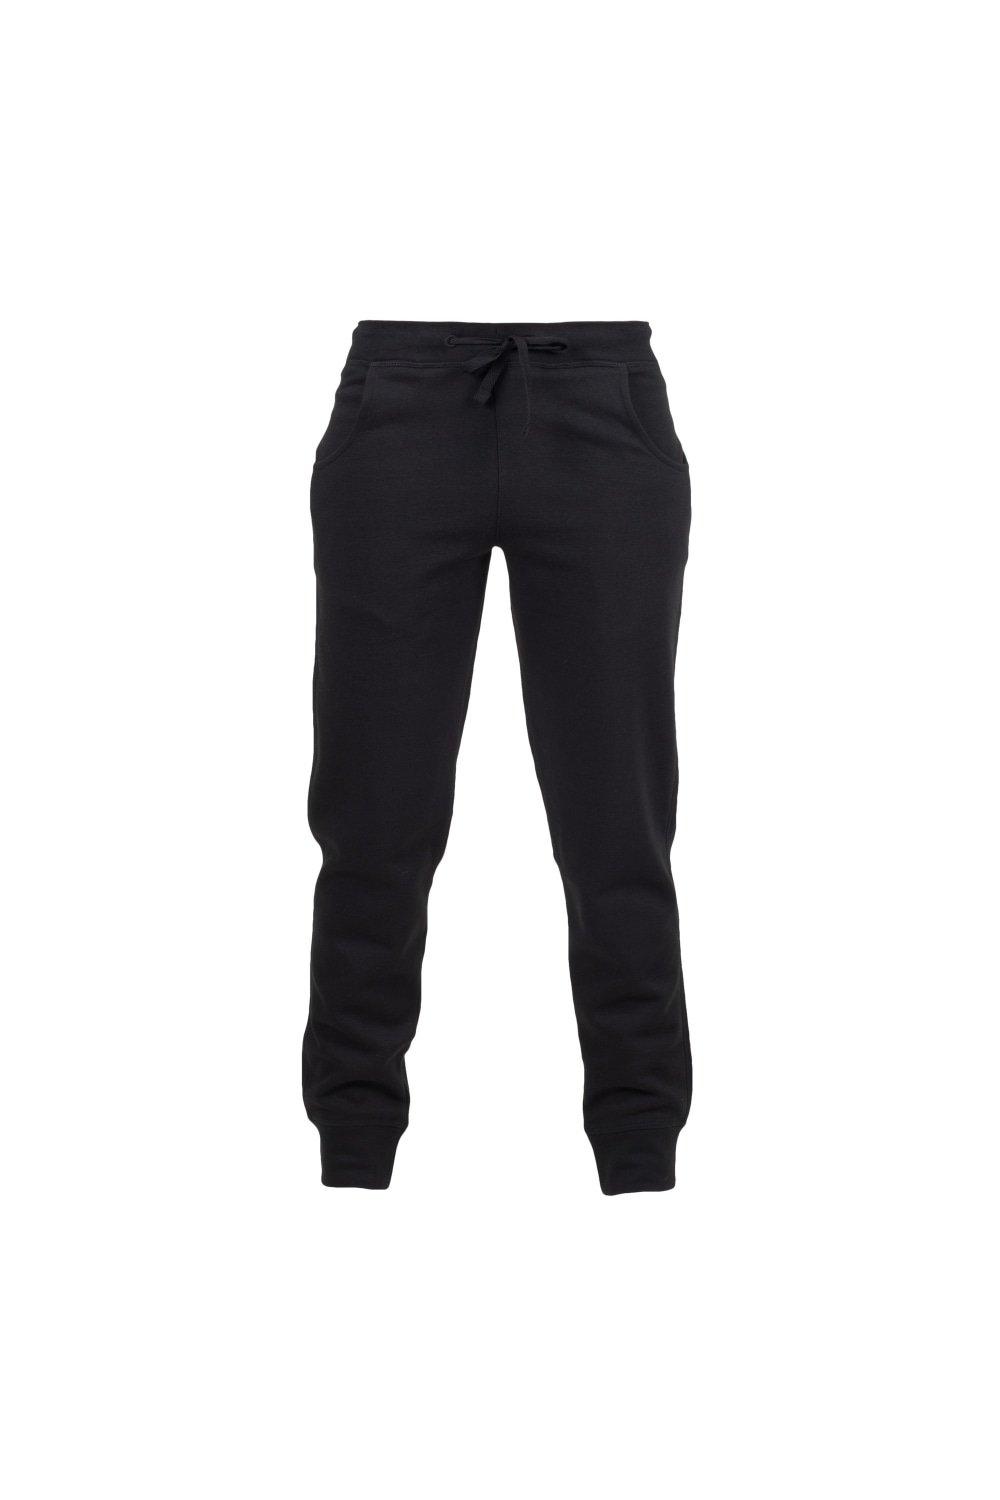 Узкие спортивные брюки Skinni Minni с манжетами (2 шт. в упаковке) Skinni Fit, черный цена и фото